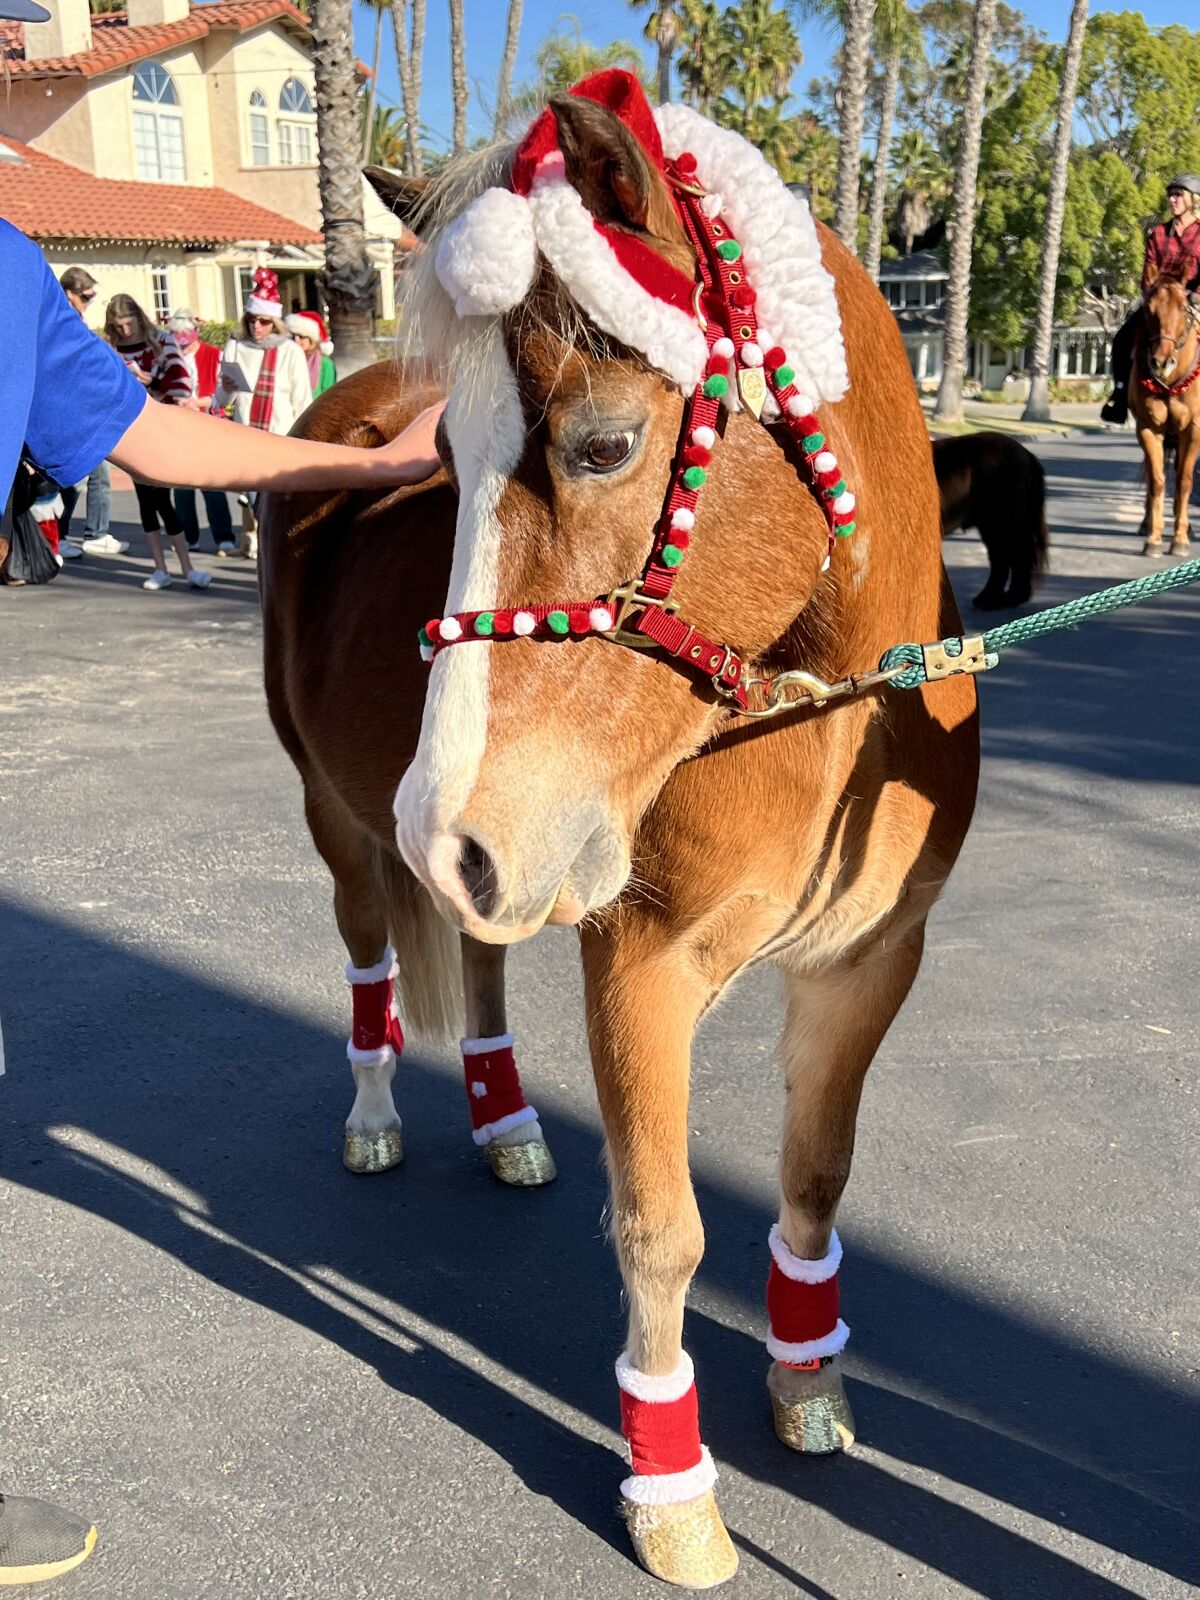 The San Dieguito Riders visited Olivenhain neighborhoods to sing Christmas carols on horseback.